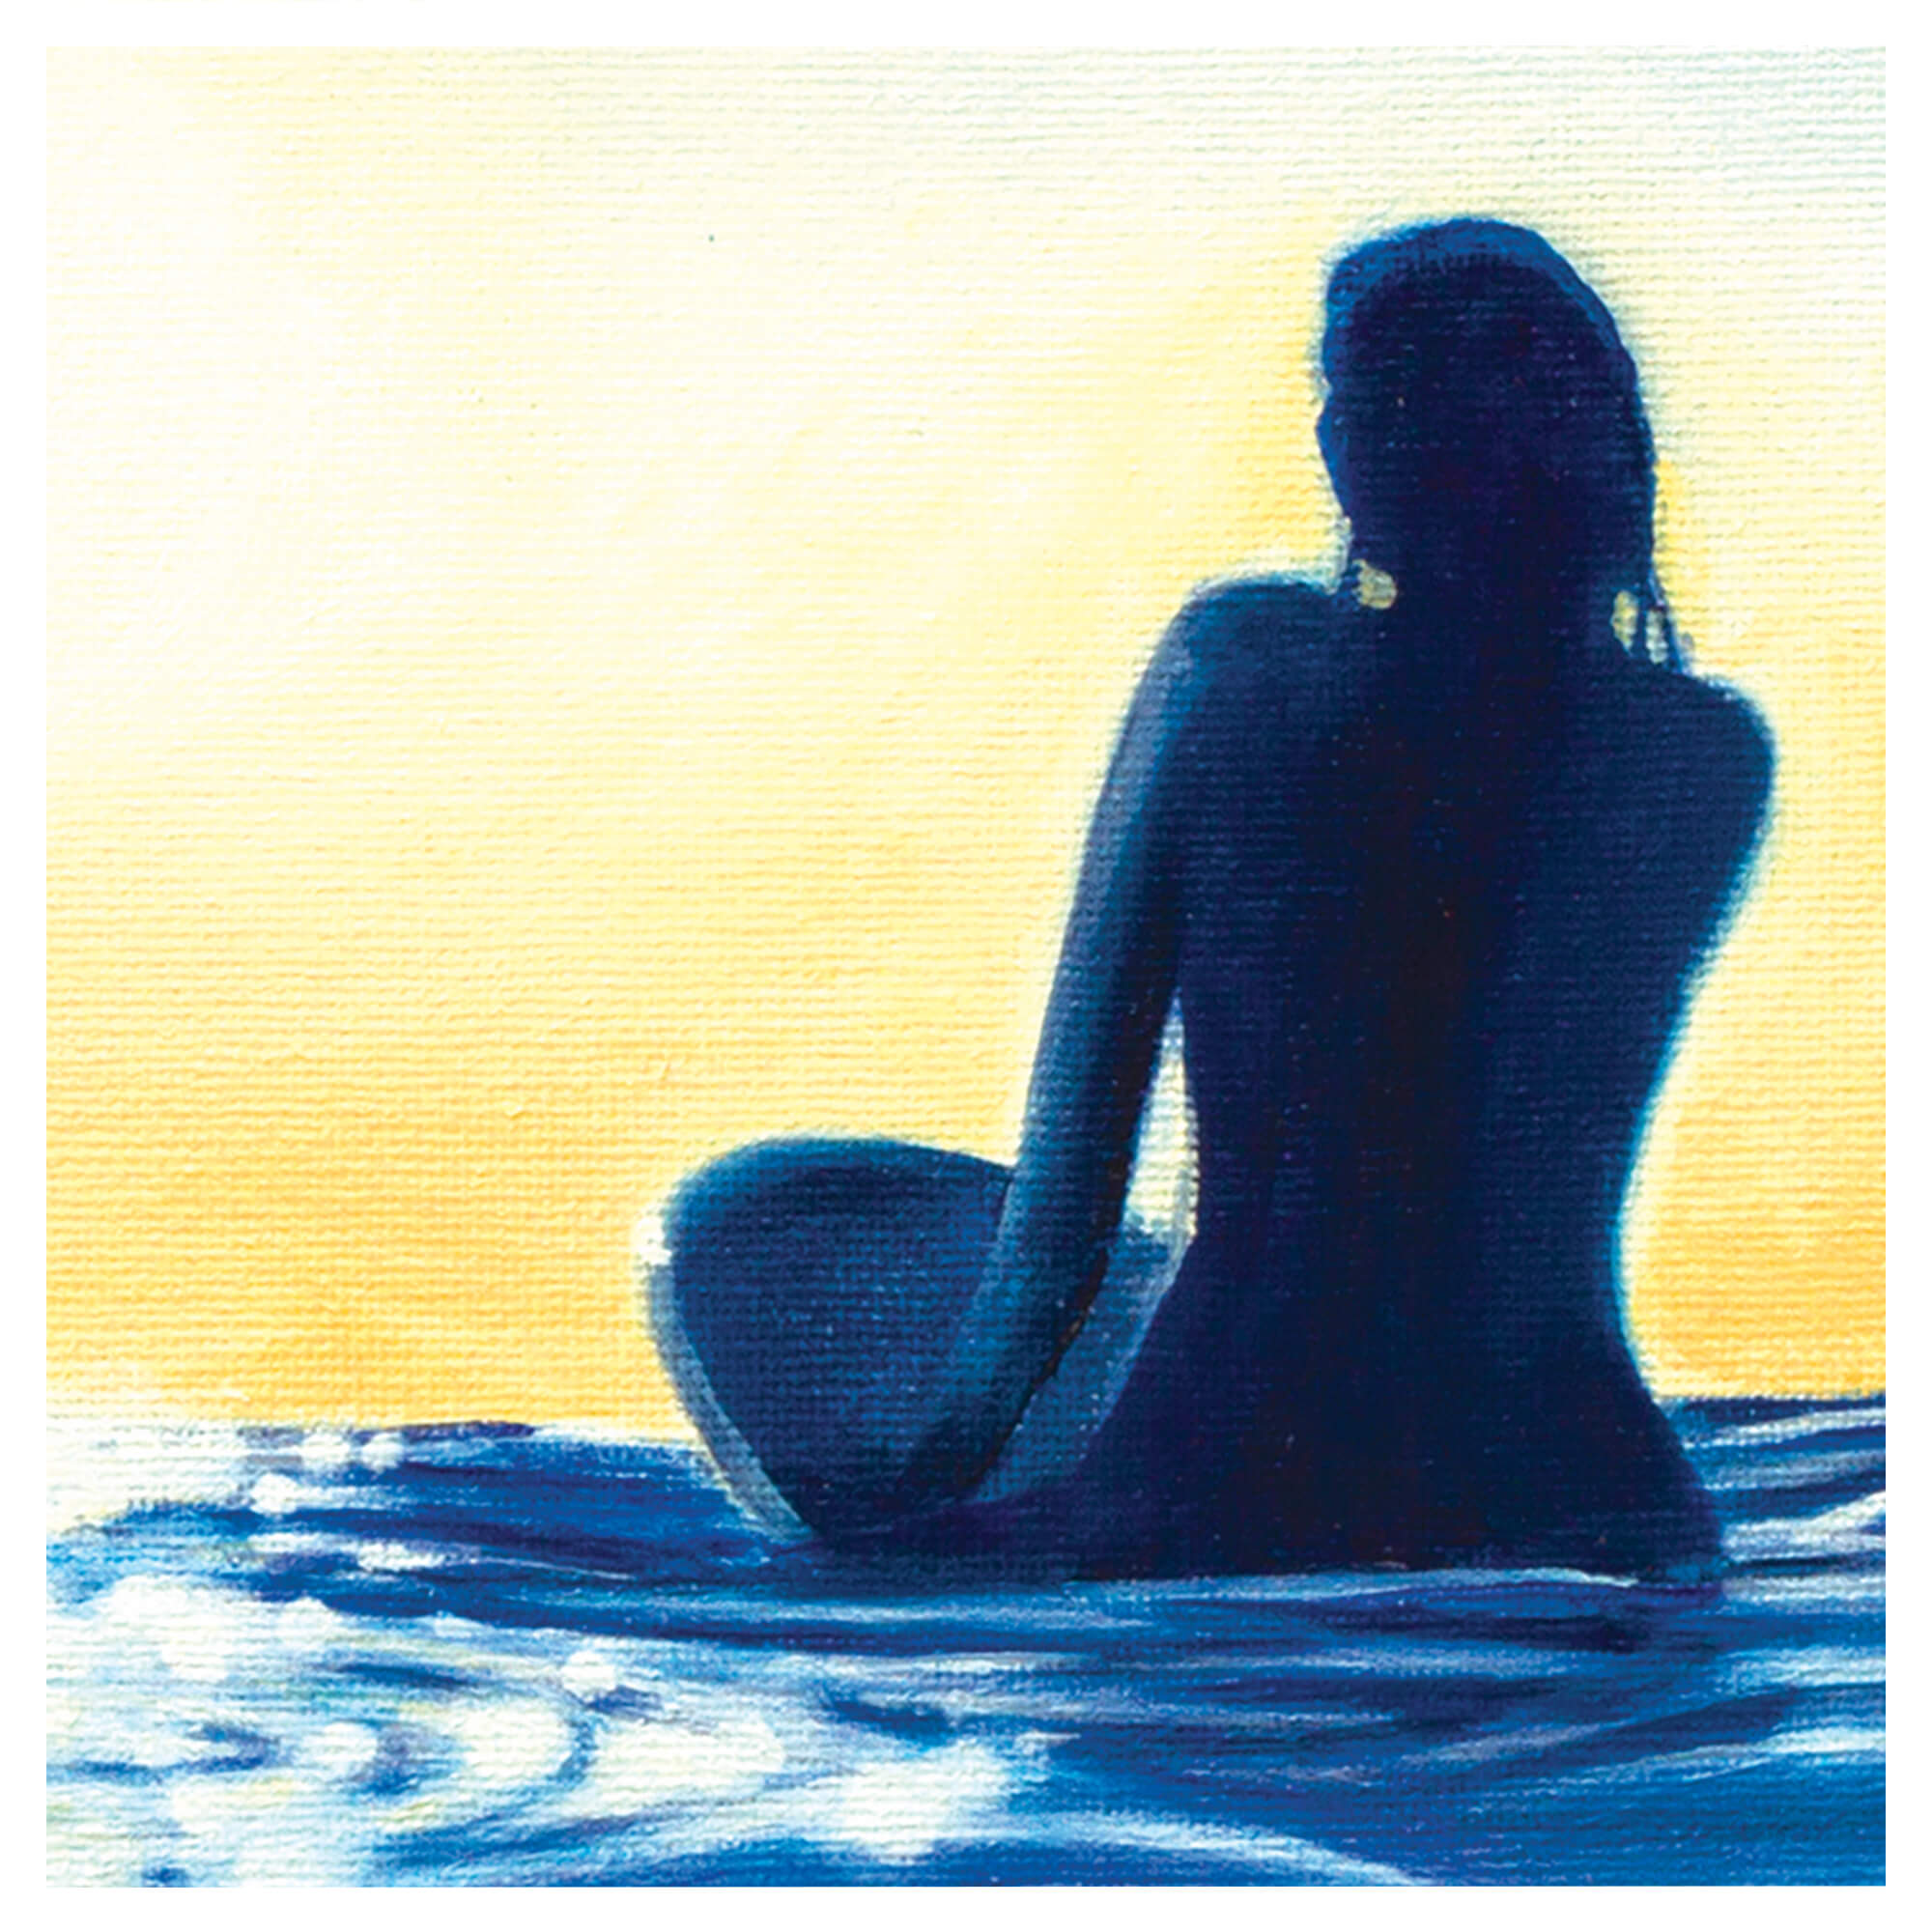 A painting of a woman on a surf boeard by hawaii artist Kelly Keane